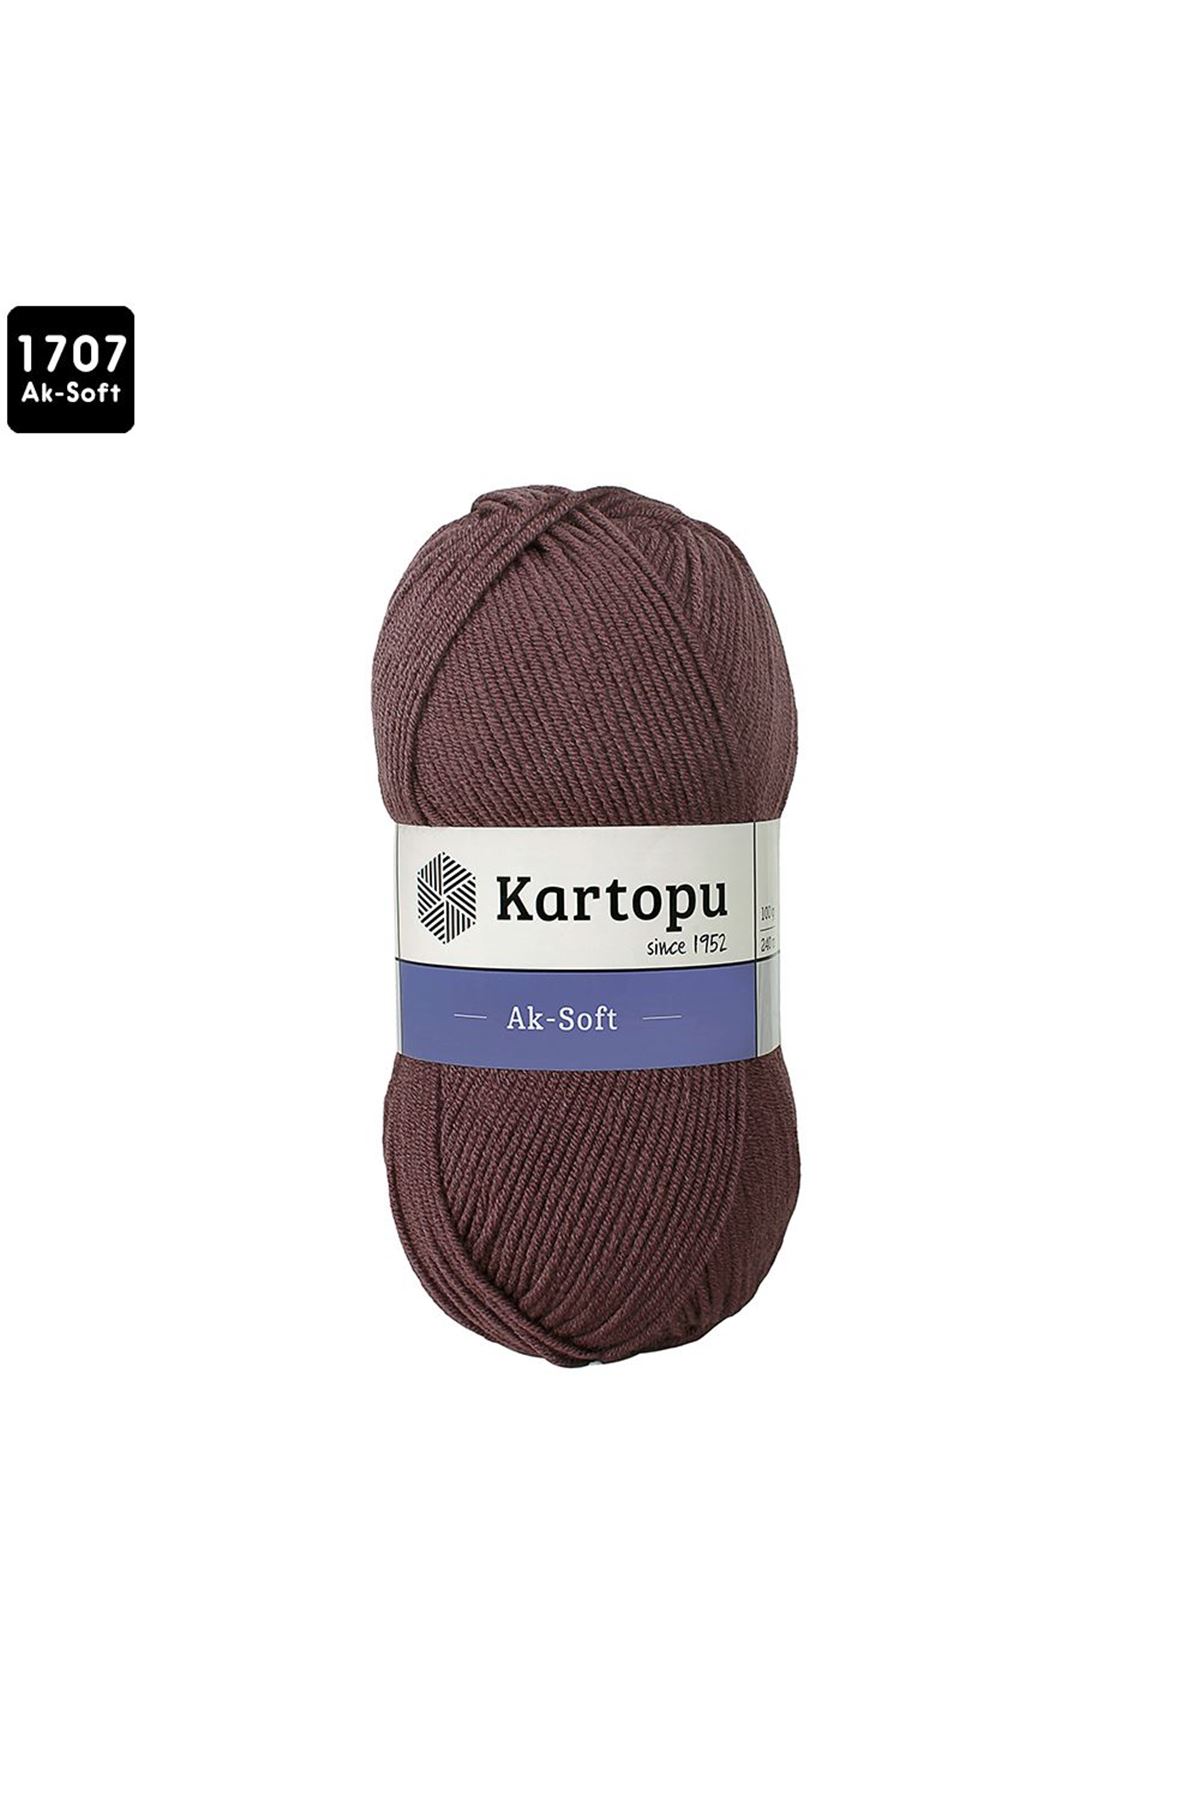 Kartopu Ak-Soft Renk No:1707